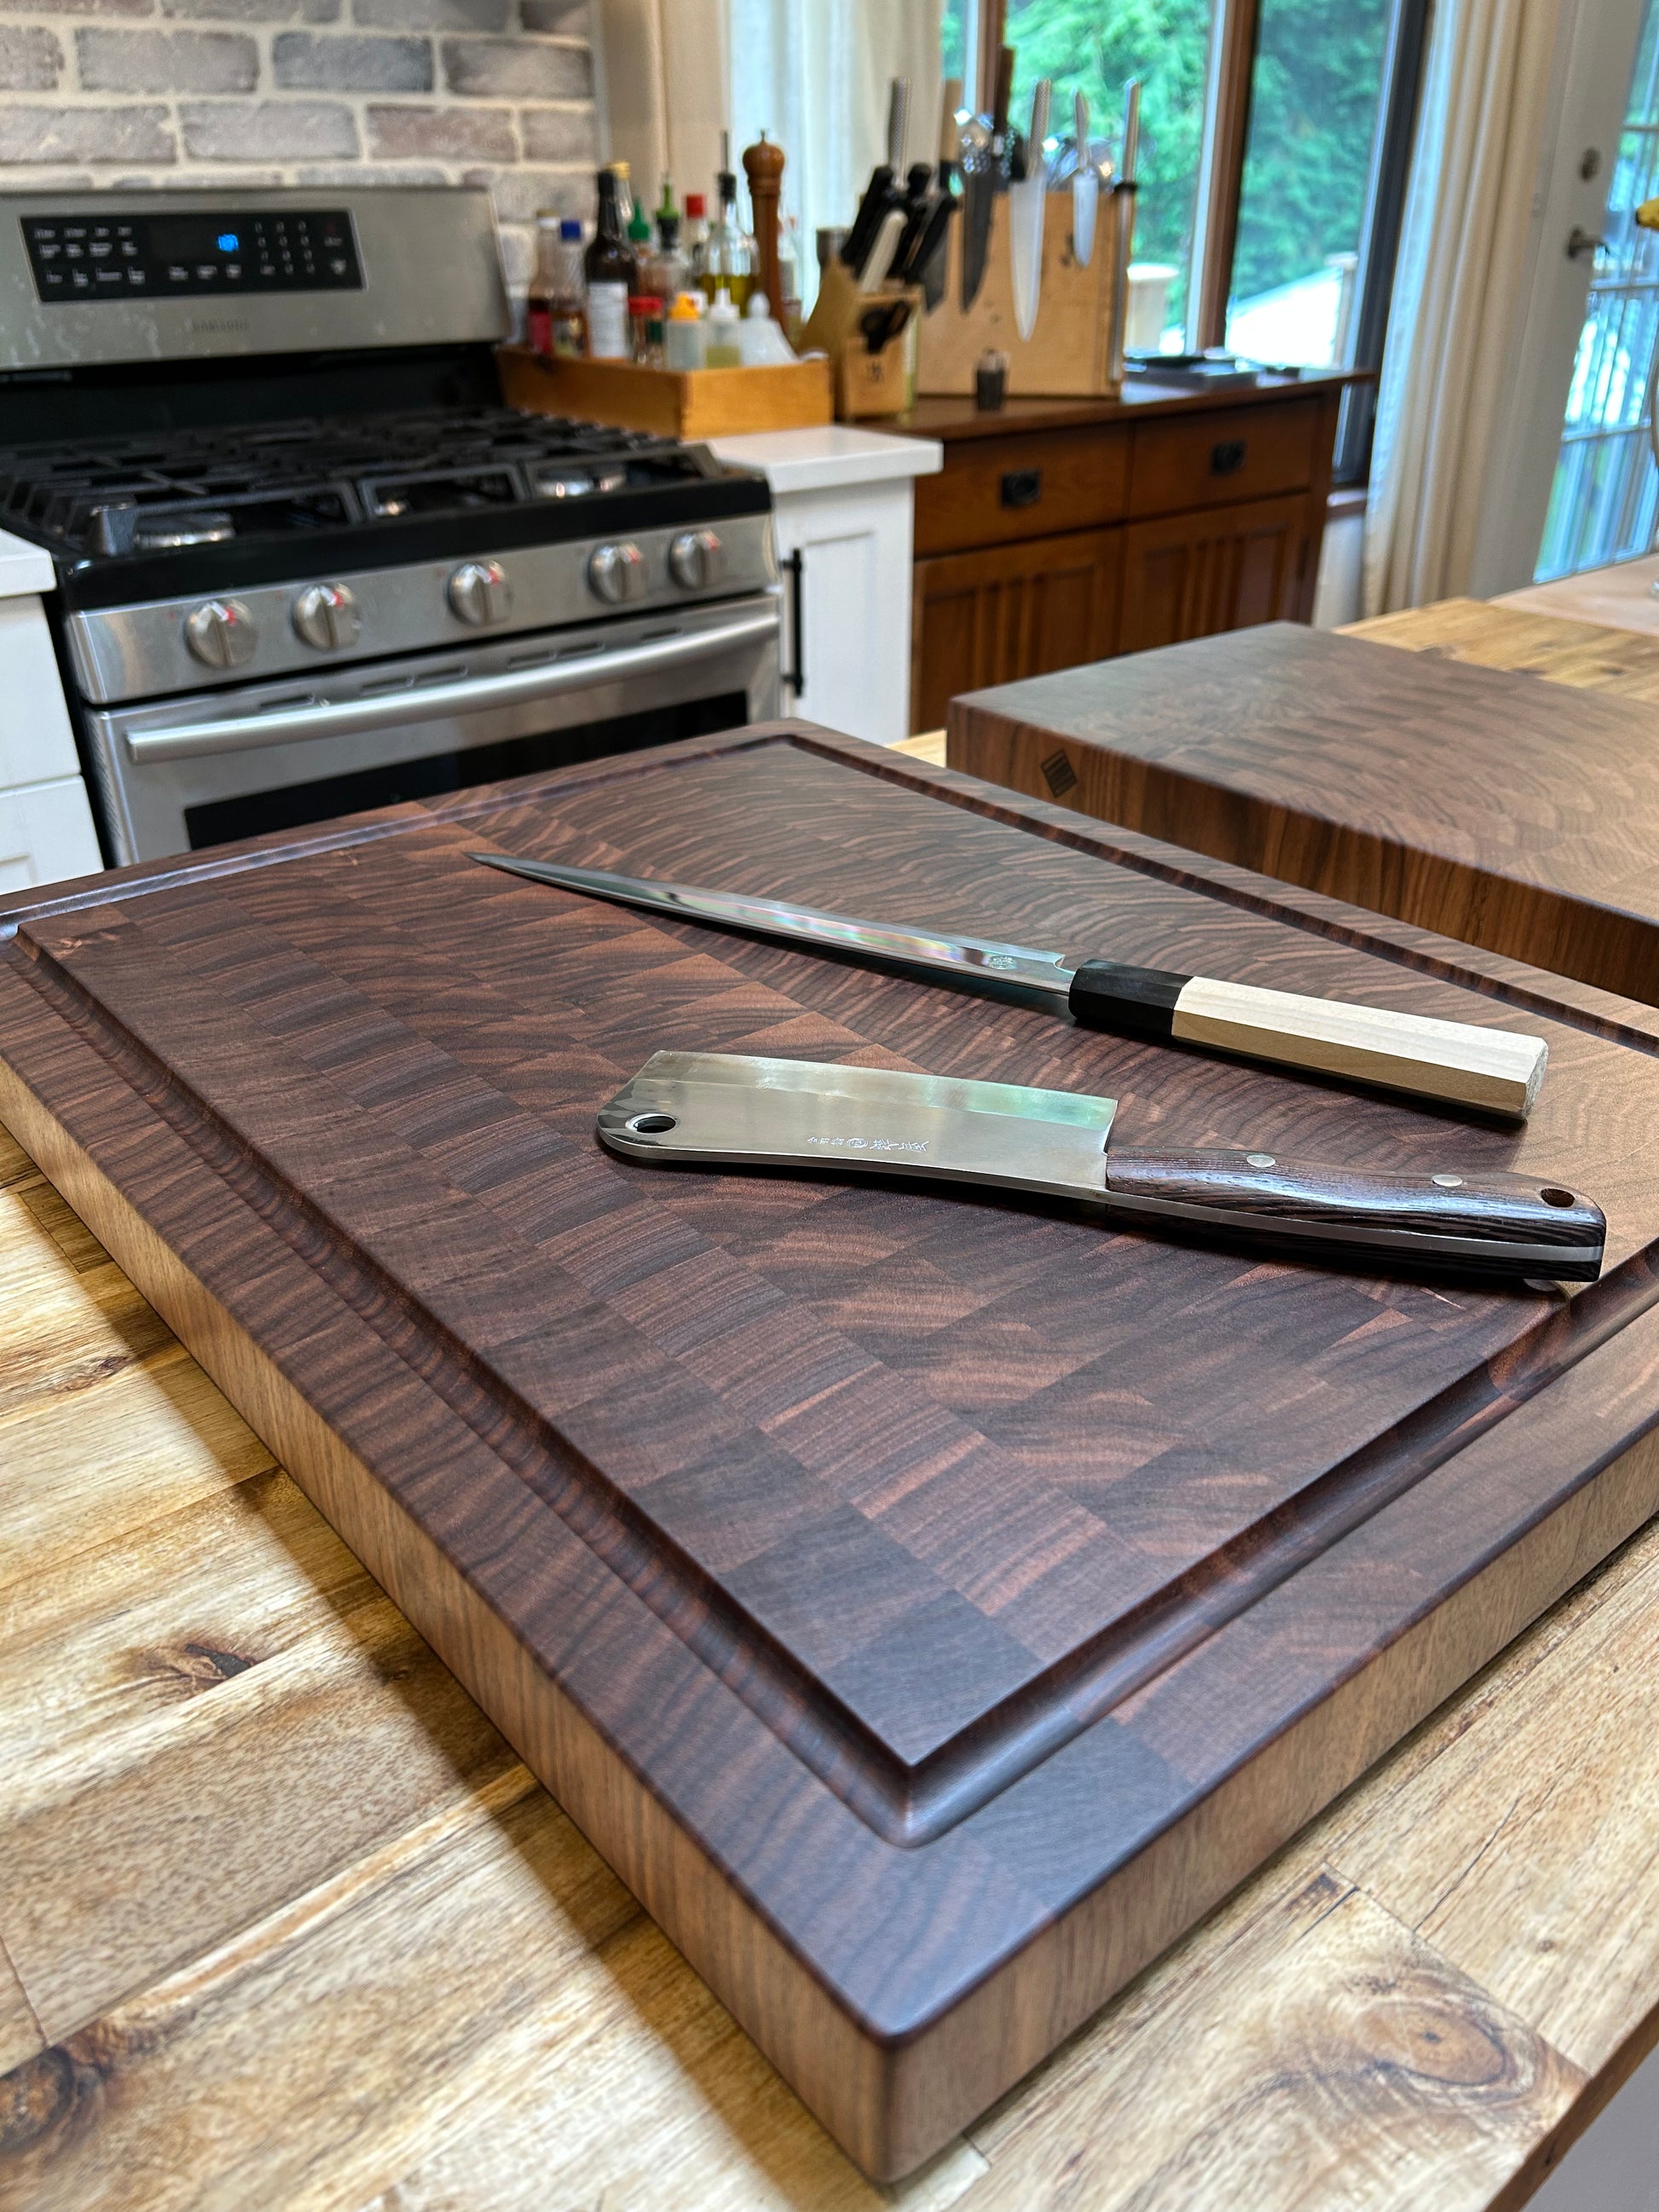  End Grain Wood cutting board - Wood Chopping block - Large  cutting board 16 x 12 Kitchen butcher block Oak cutting board non slip cutting  board with feet - Kitchen Wooden